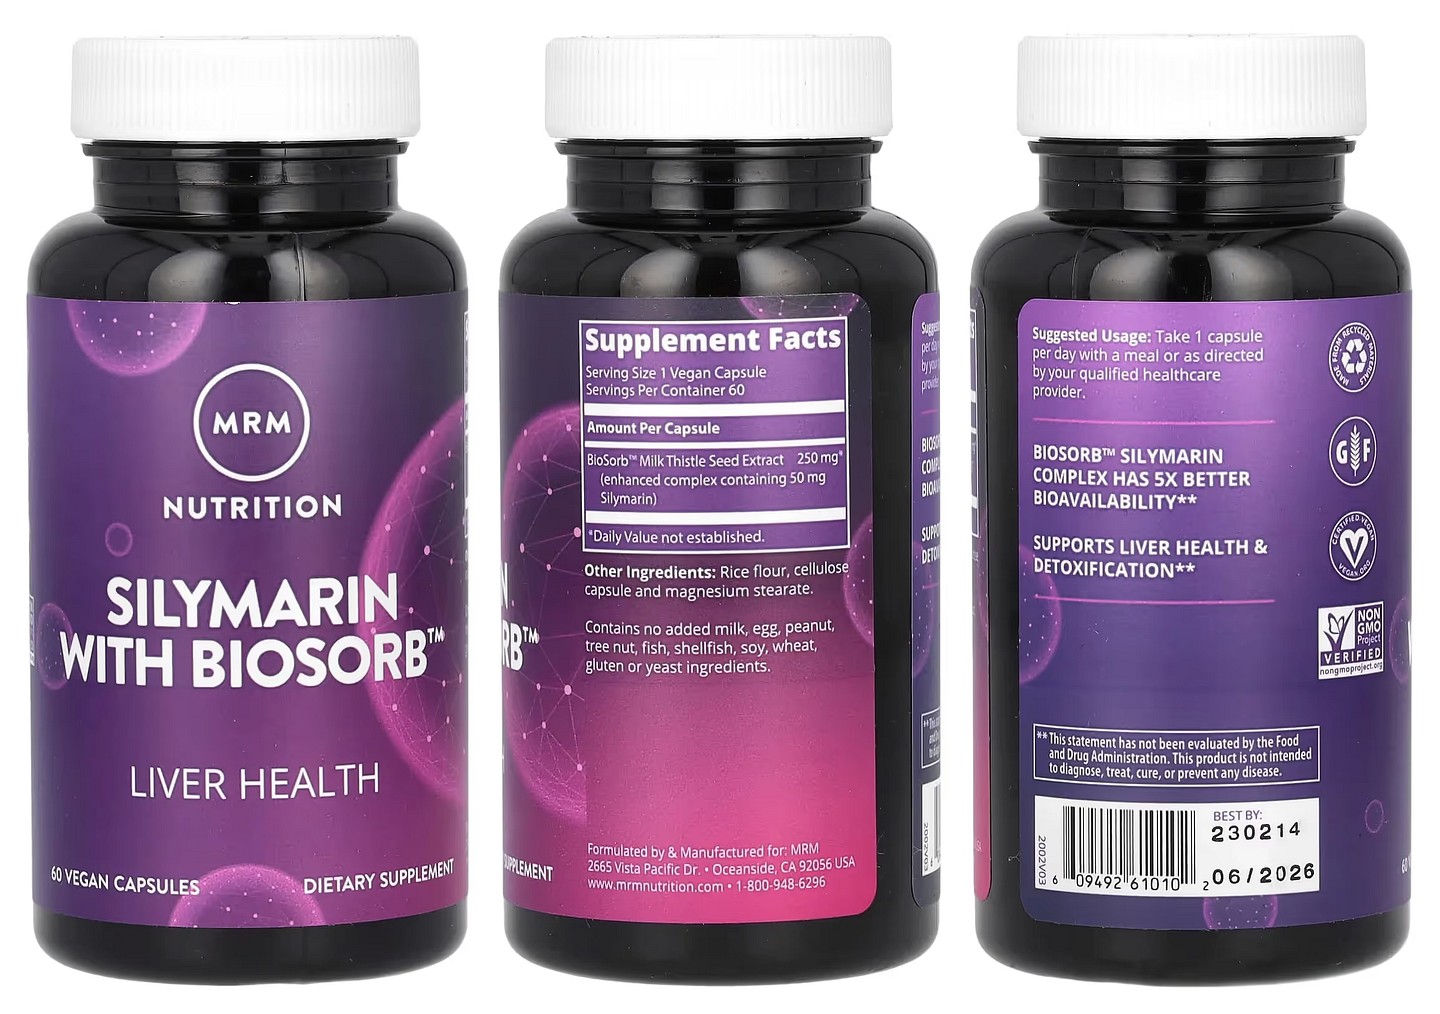 MRM Nutrition, Silymarin with Biosorb packaging